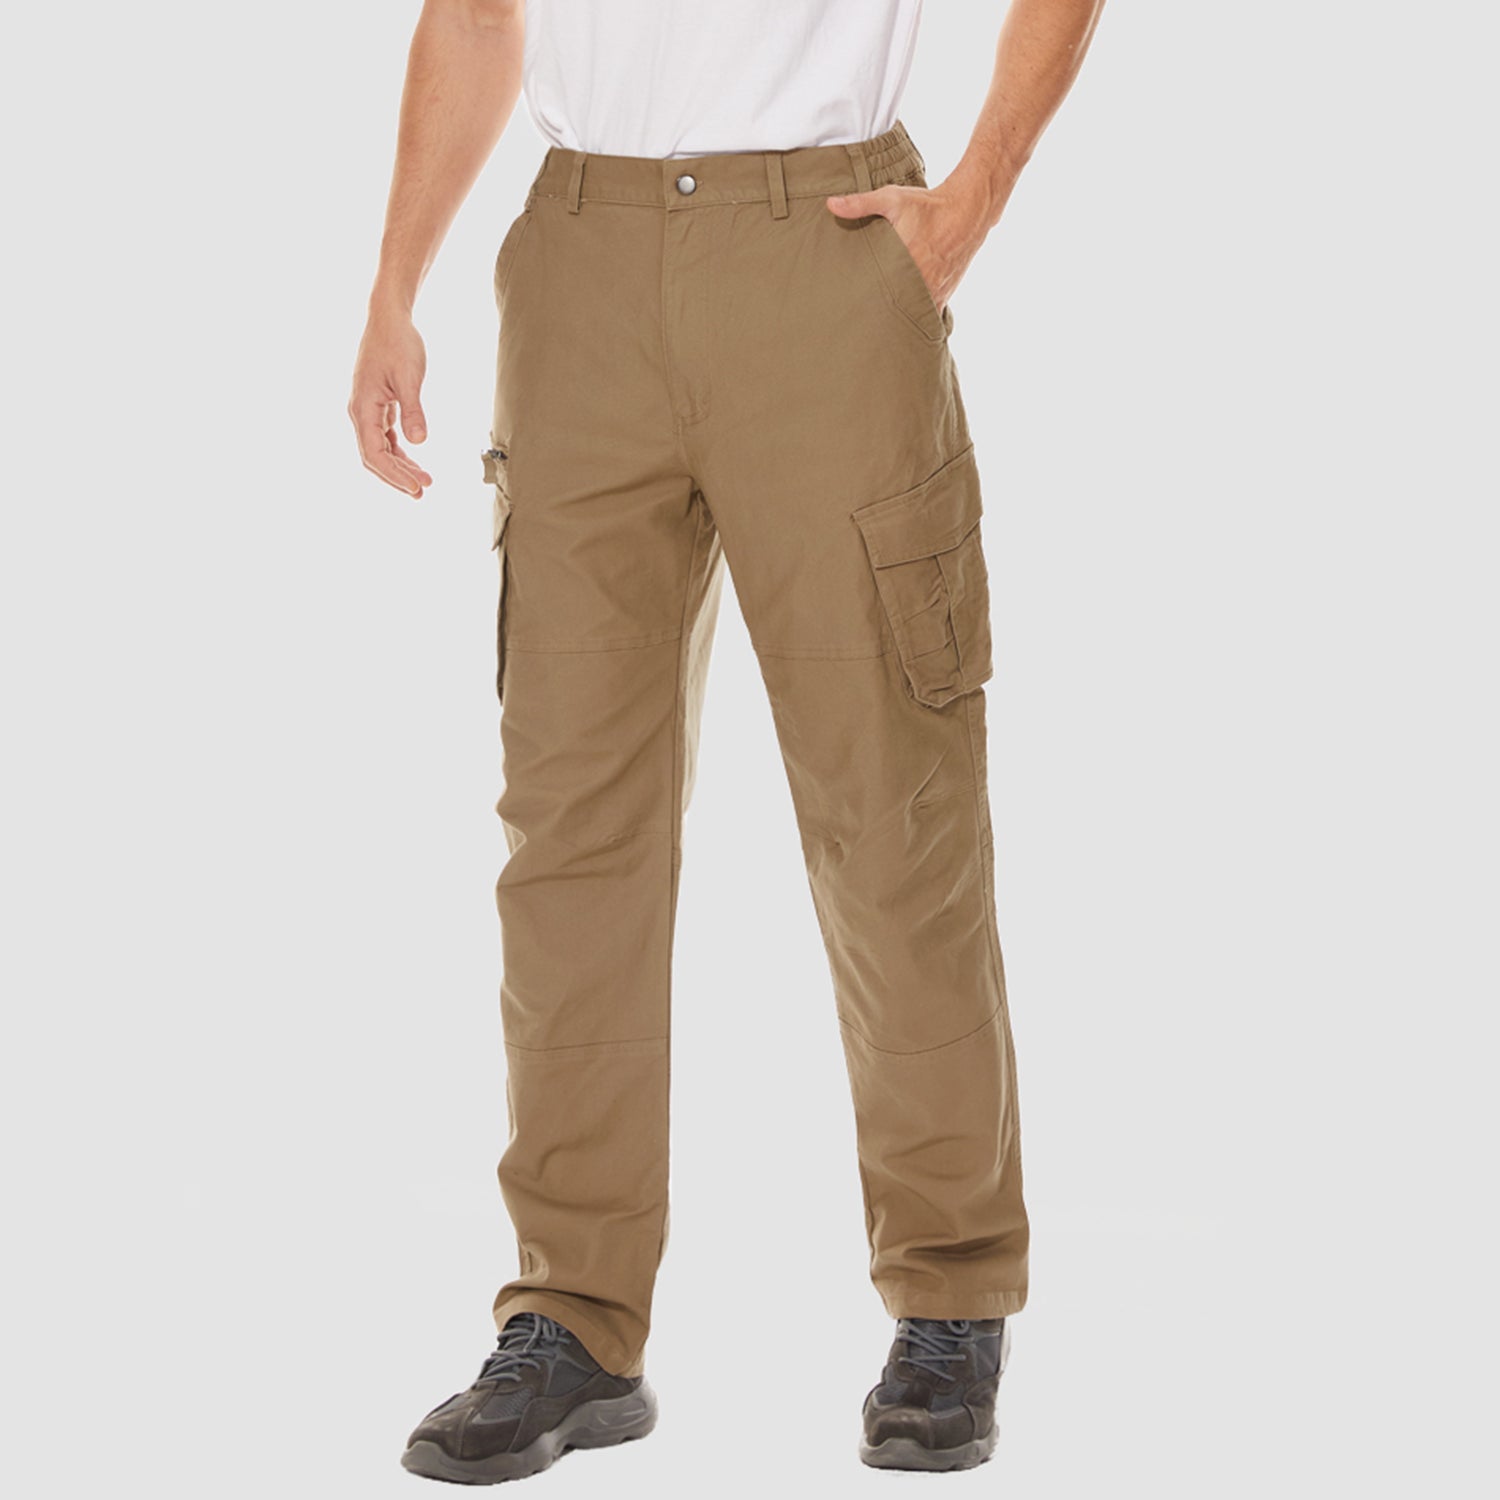 MAGCOMSEN Men's Cargo Pants Ripstop Straight Leg Tactical Pants, Khaki / 40